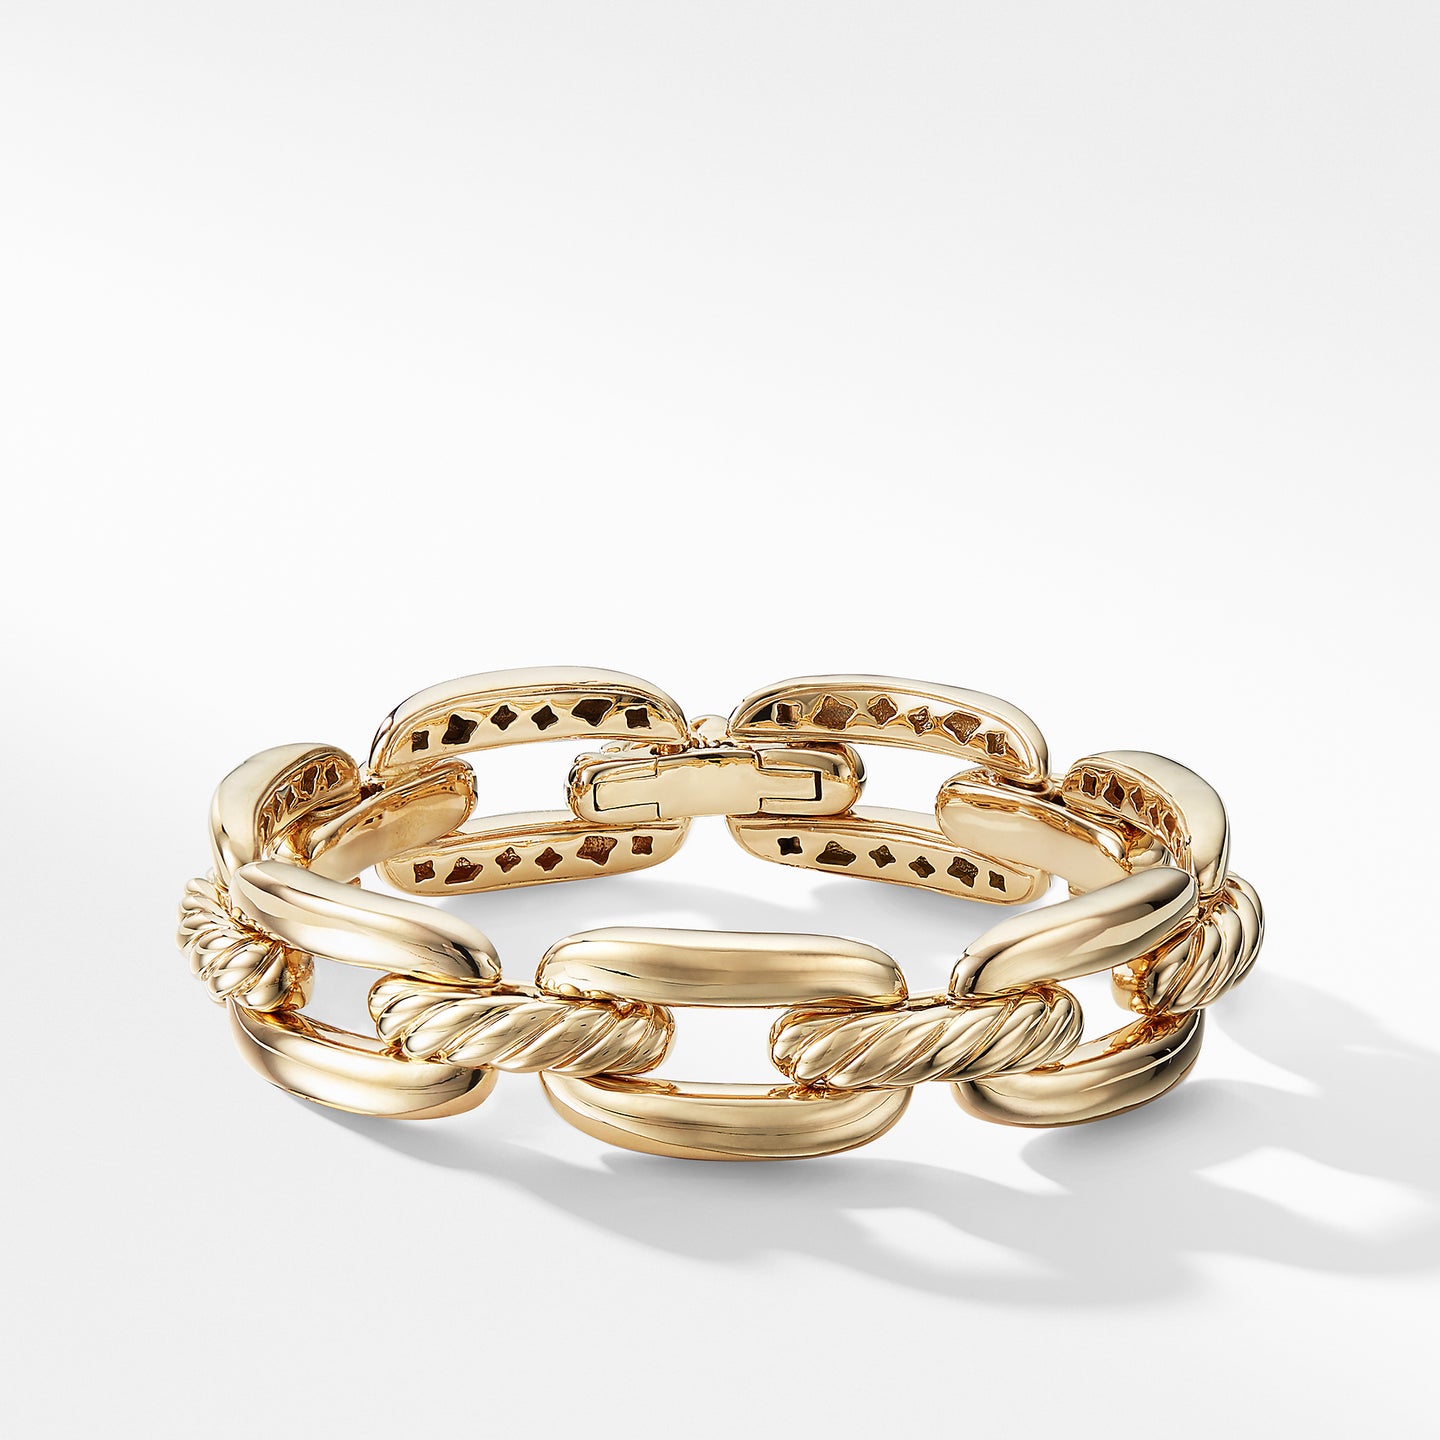 Wellesley Chain Bracelet in 18K Gold, 14mm, Size Medium